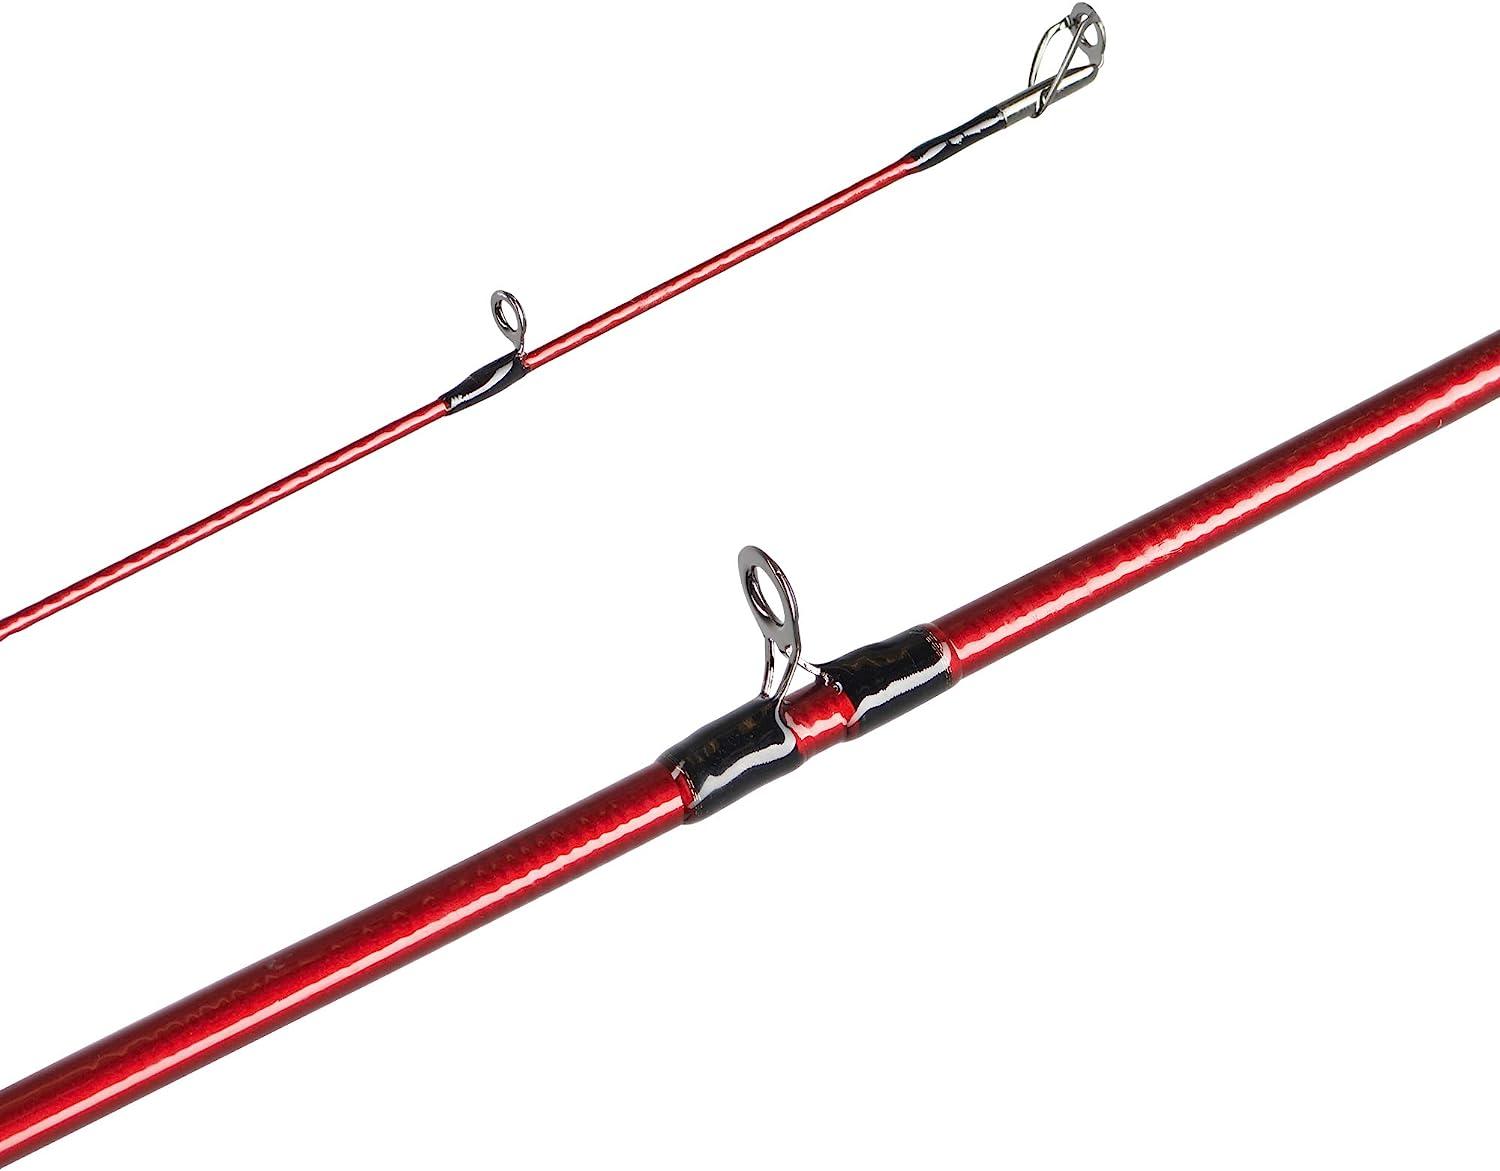 Ugly Stik Carbon Casting Fishing Rod 7' - Medium Heavy - 1pc